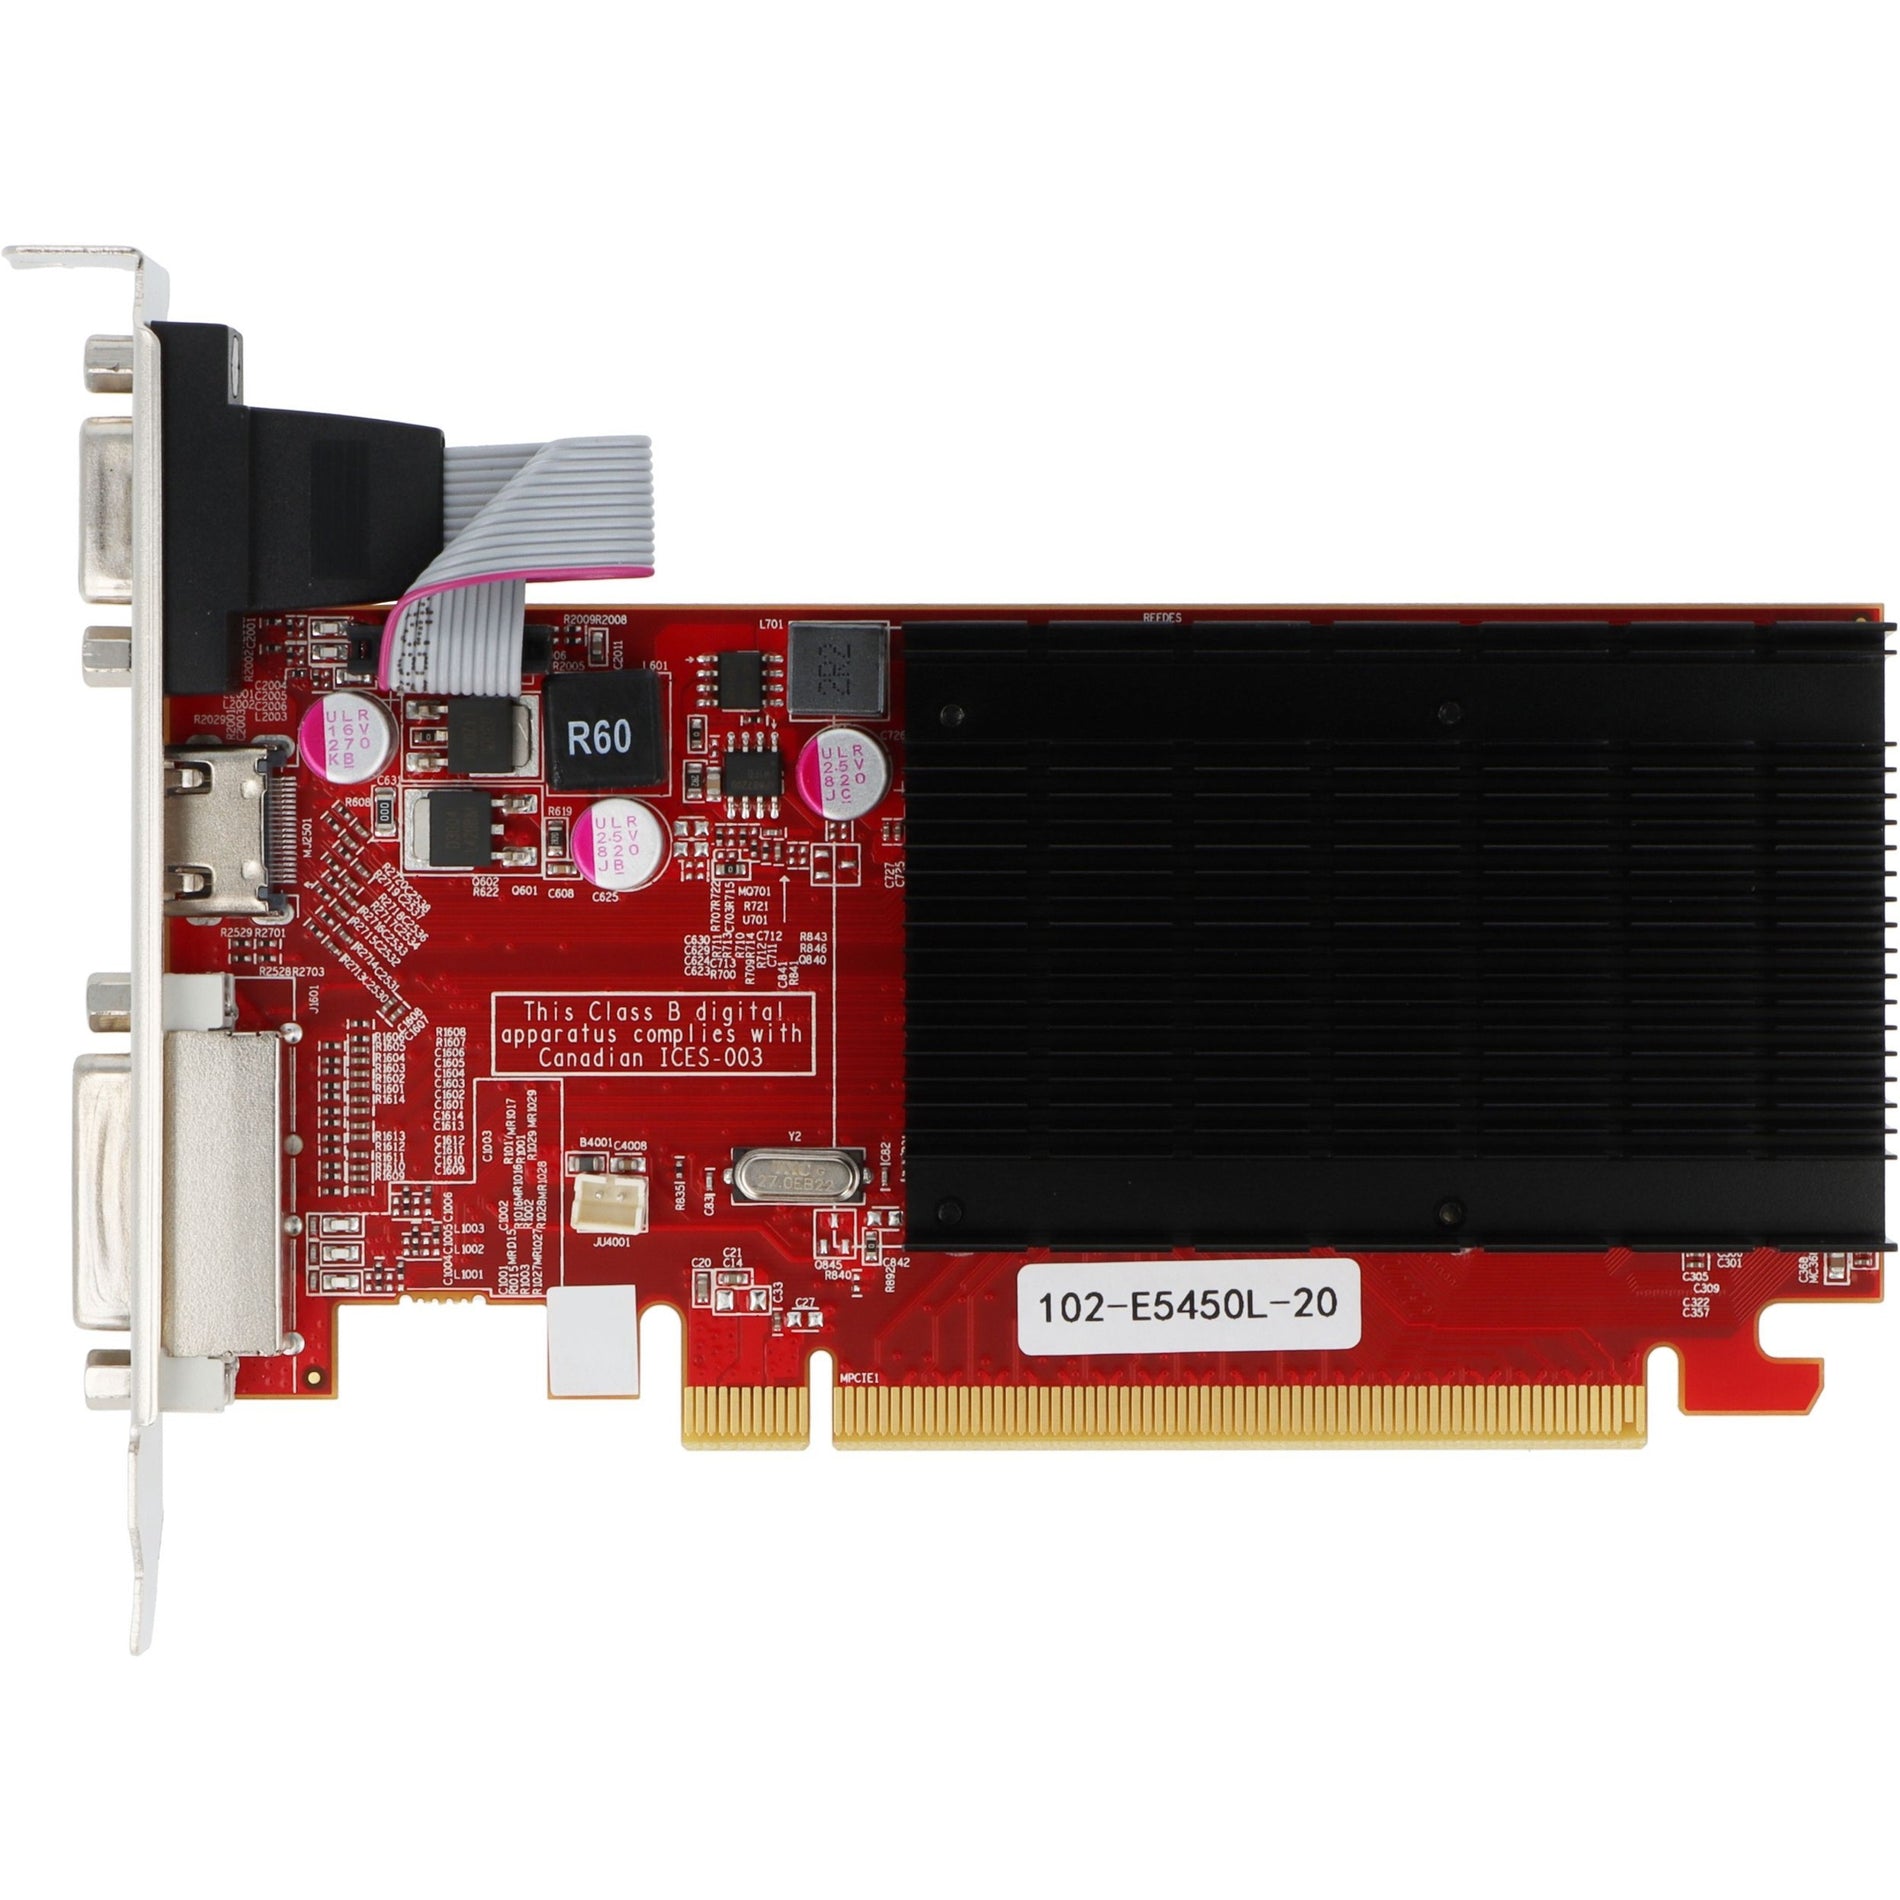 VisionTek 900861 AMD Radeon 5450 Graphic Card, 2GB DDR3, DVI-I, HDMI, VGA